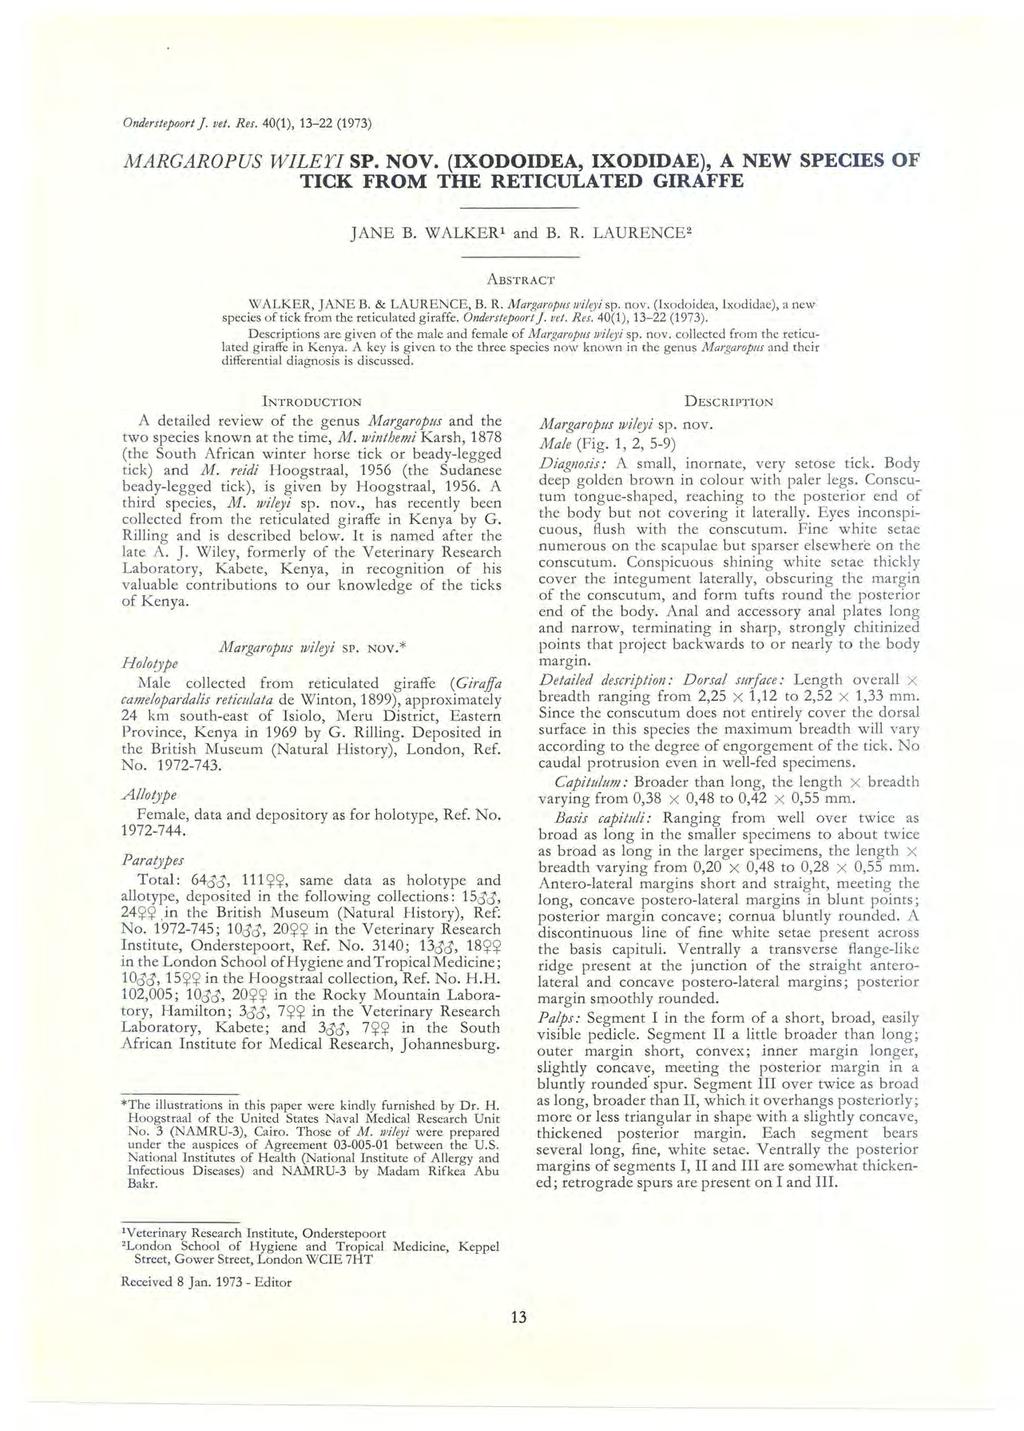 Onderstepoort]. vet. Res. 40(1), 13-22 (1973) MARGAROPUS WLY! SP. NOV. (XODODA, XODDA), A NW SPCS OF TCK FROM TH RTCULATD GRAFF JAN B. WALK R 1 and B. R. LAURNC2 ABSTRACT WALKR, JAN B. & LAURNC, B. R. Margaropus JPillf)'i sp.